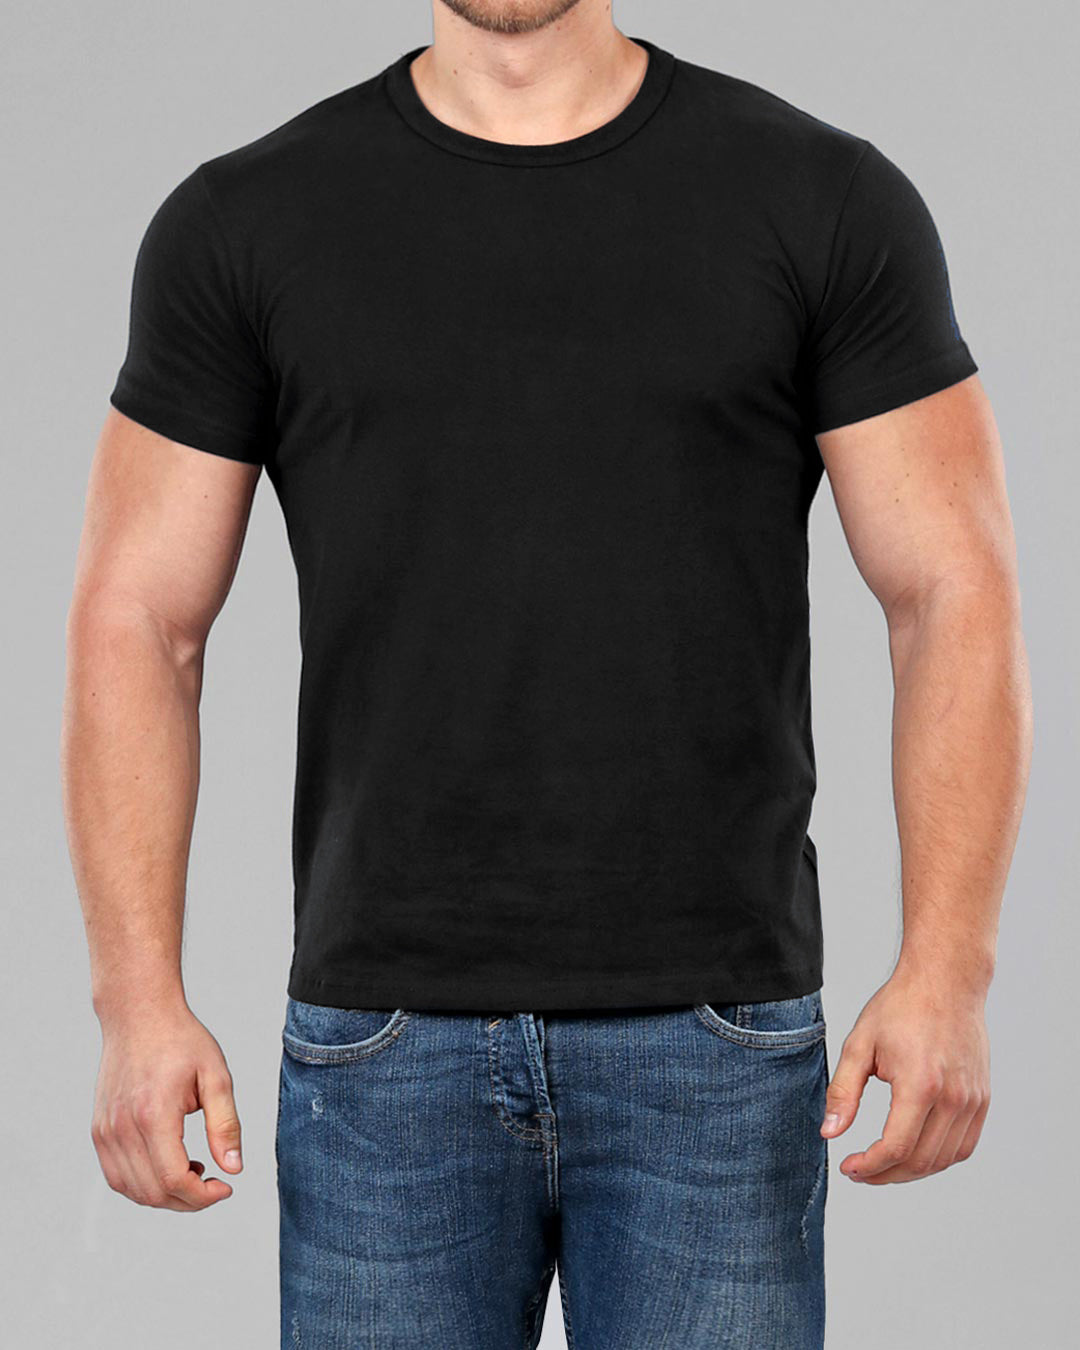 Men's Black Neck Fitted Plain T-Shirt Muscle Fit